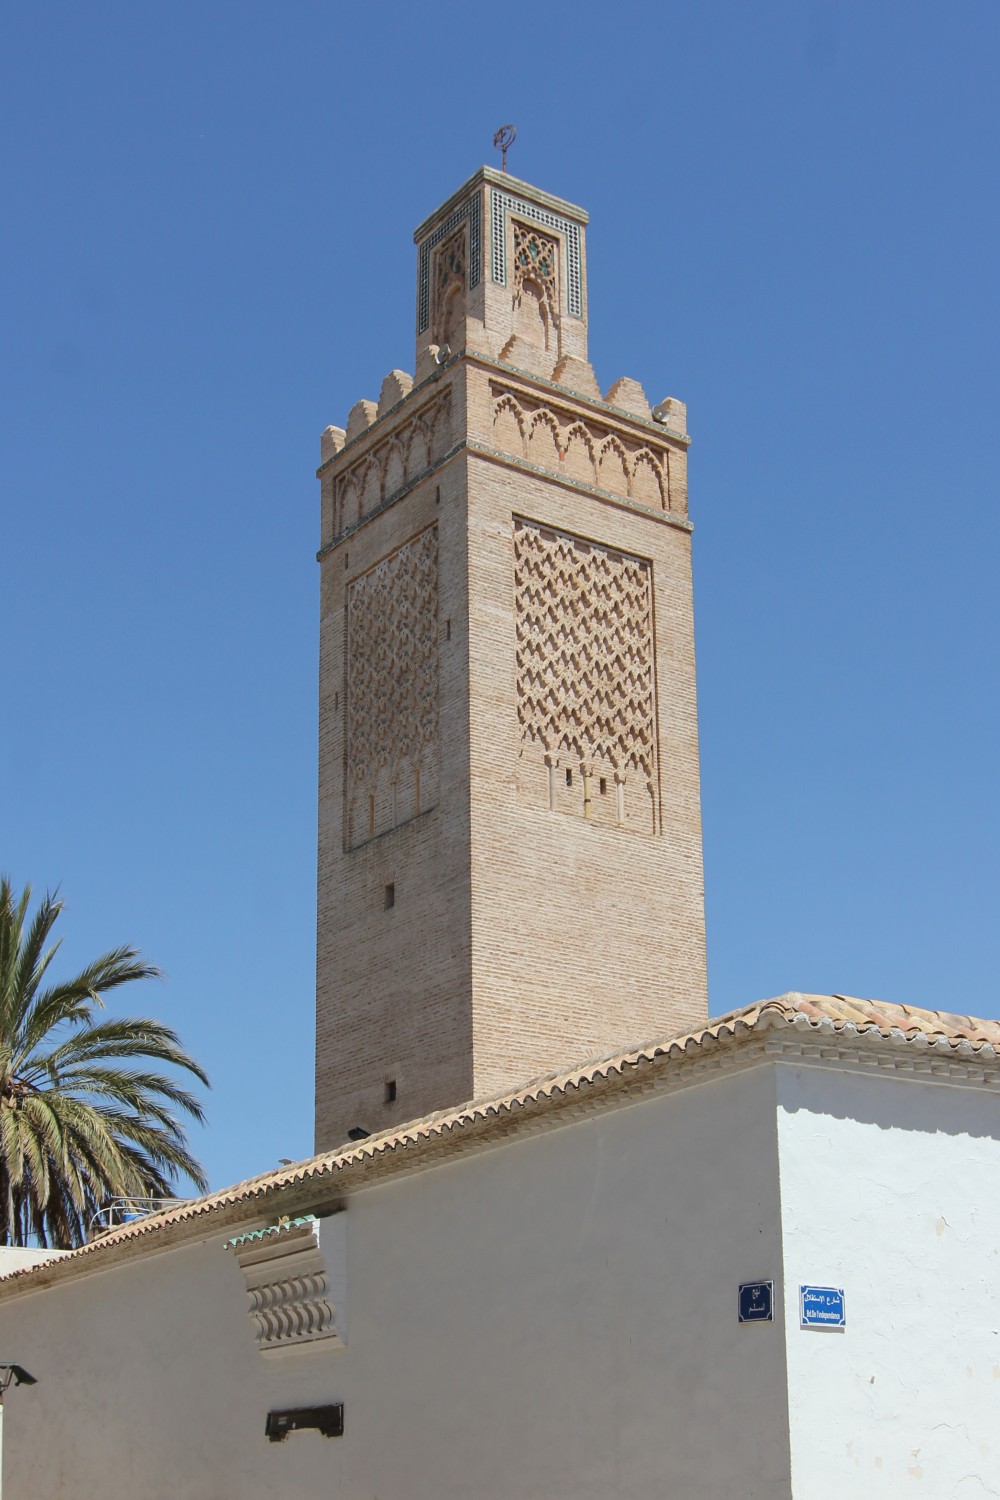 Minaret of the Great Mosque of Tlemcen